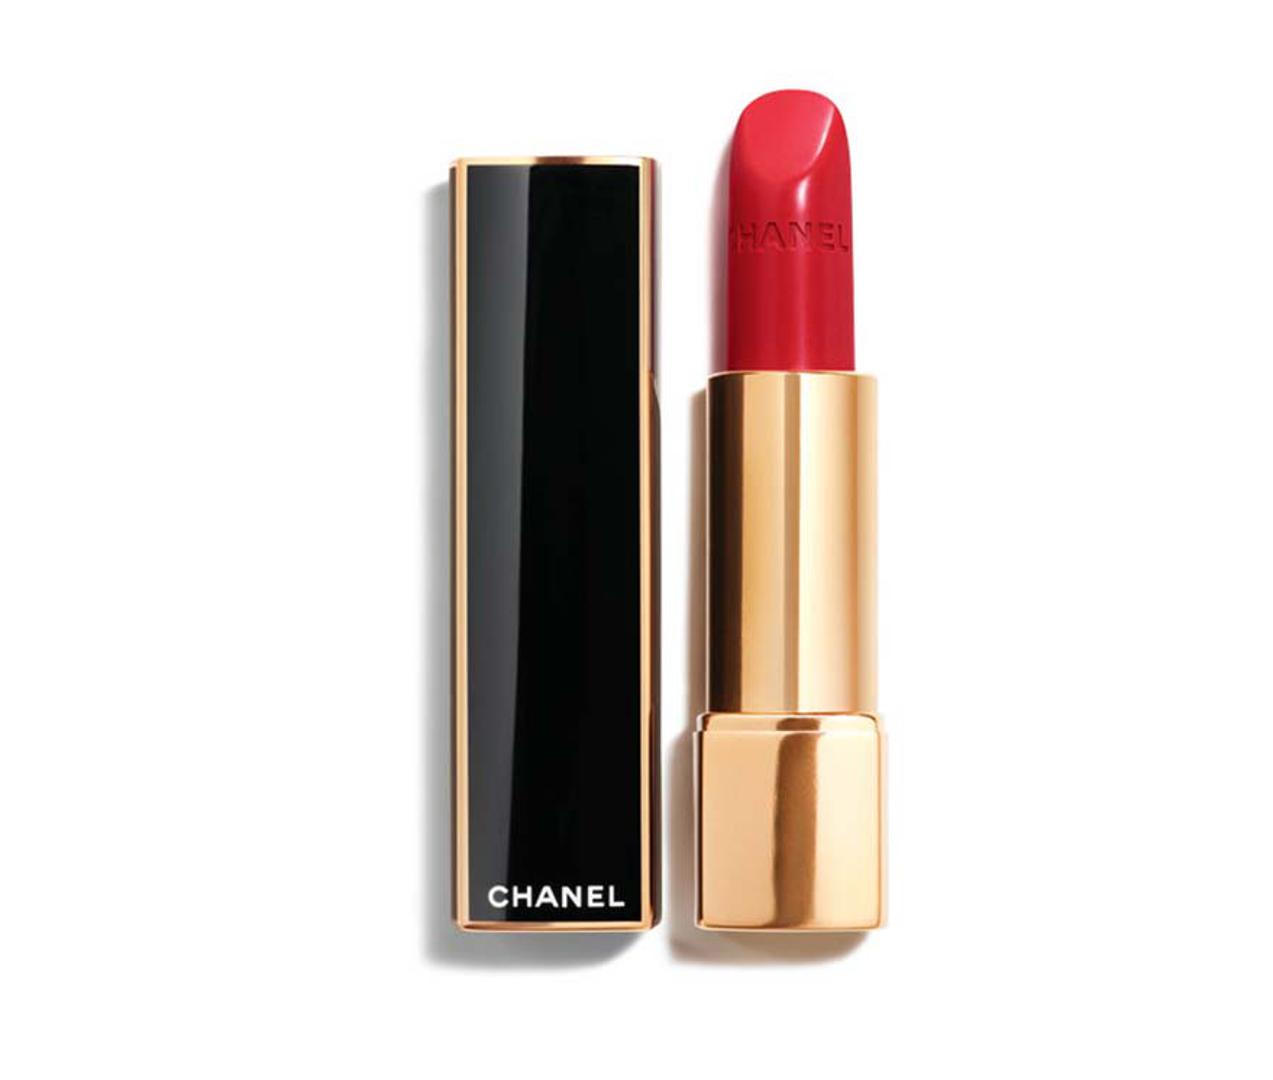 Chanel Rouge Allure Rouge Spectaculaire, Douglas, 355 kn